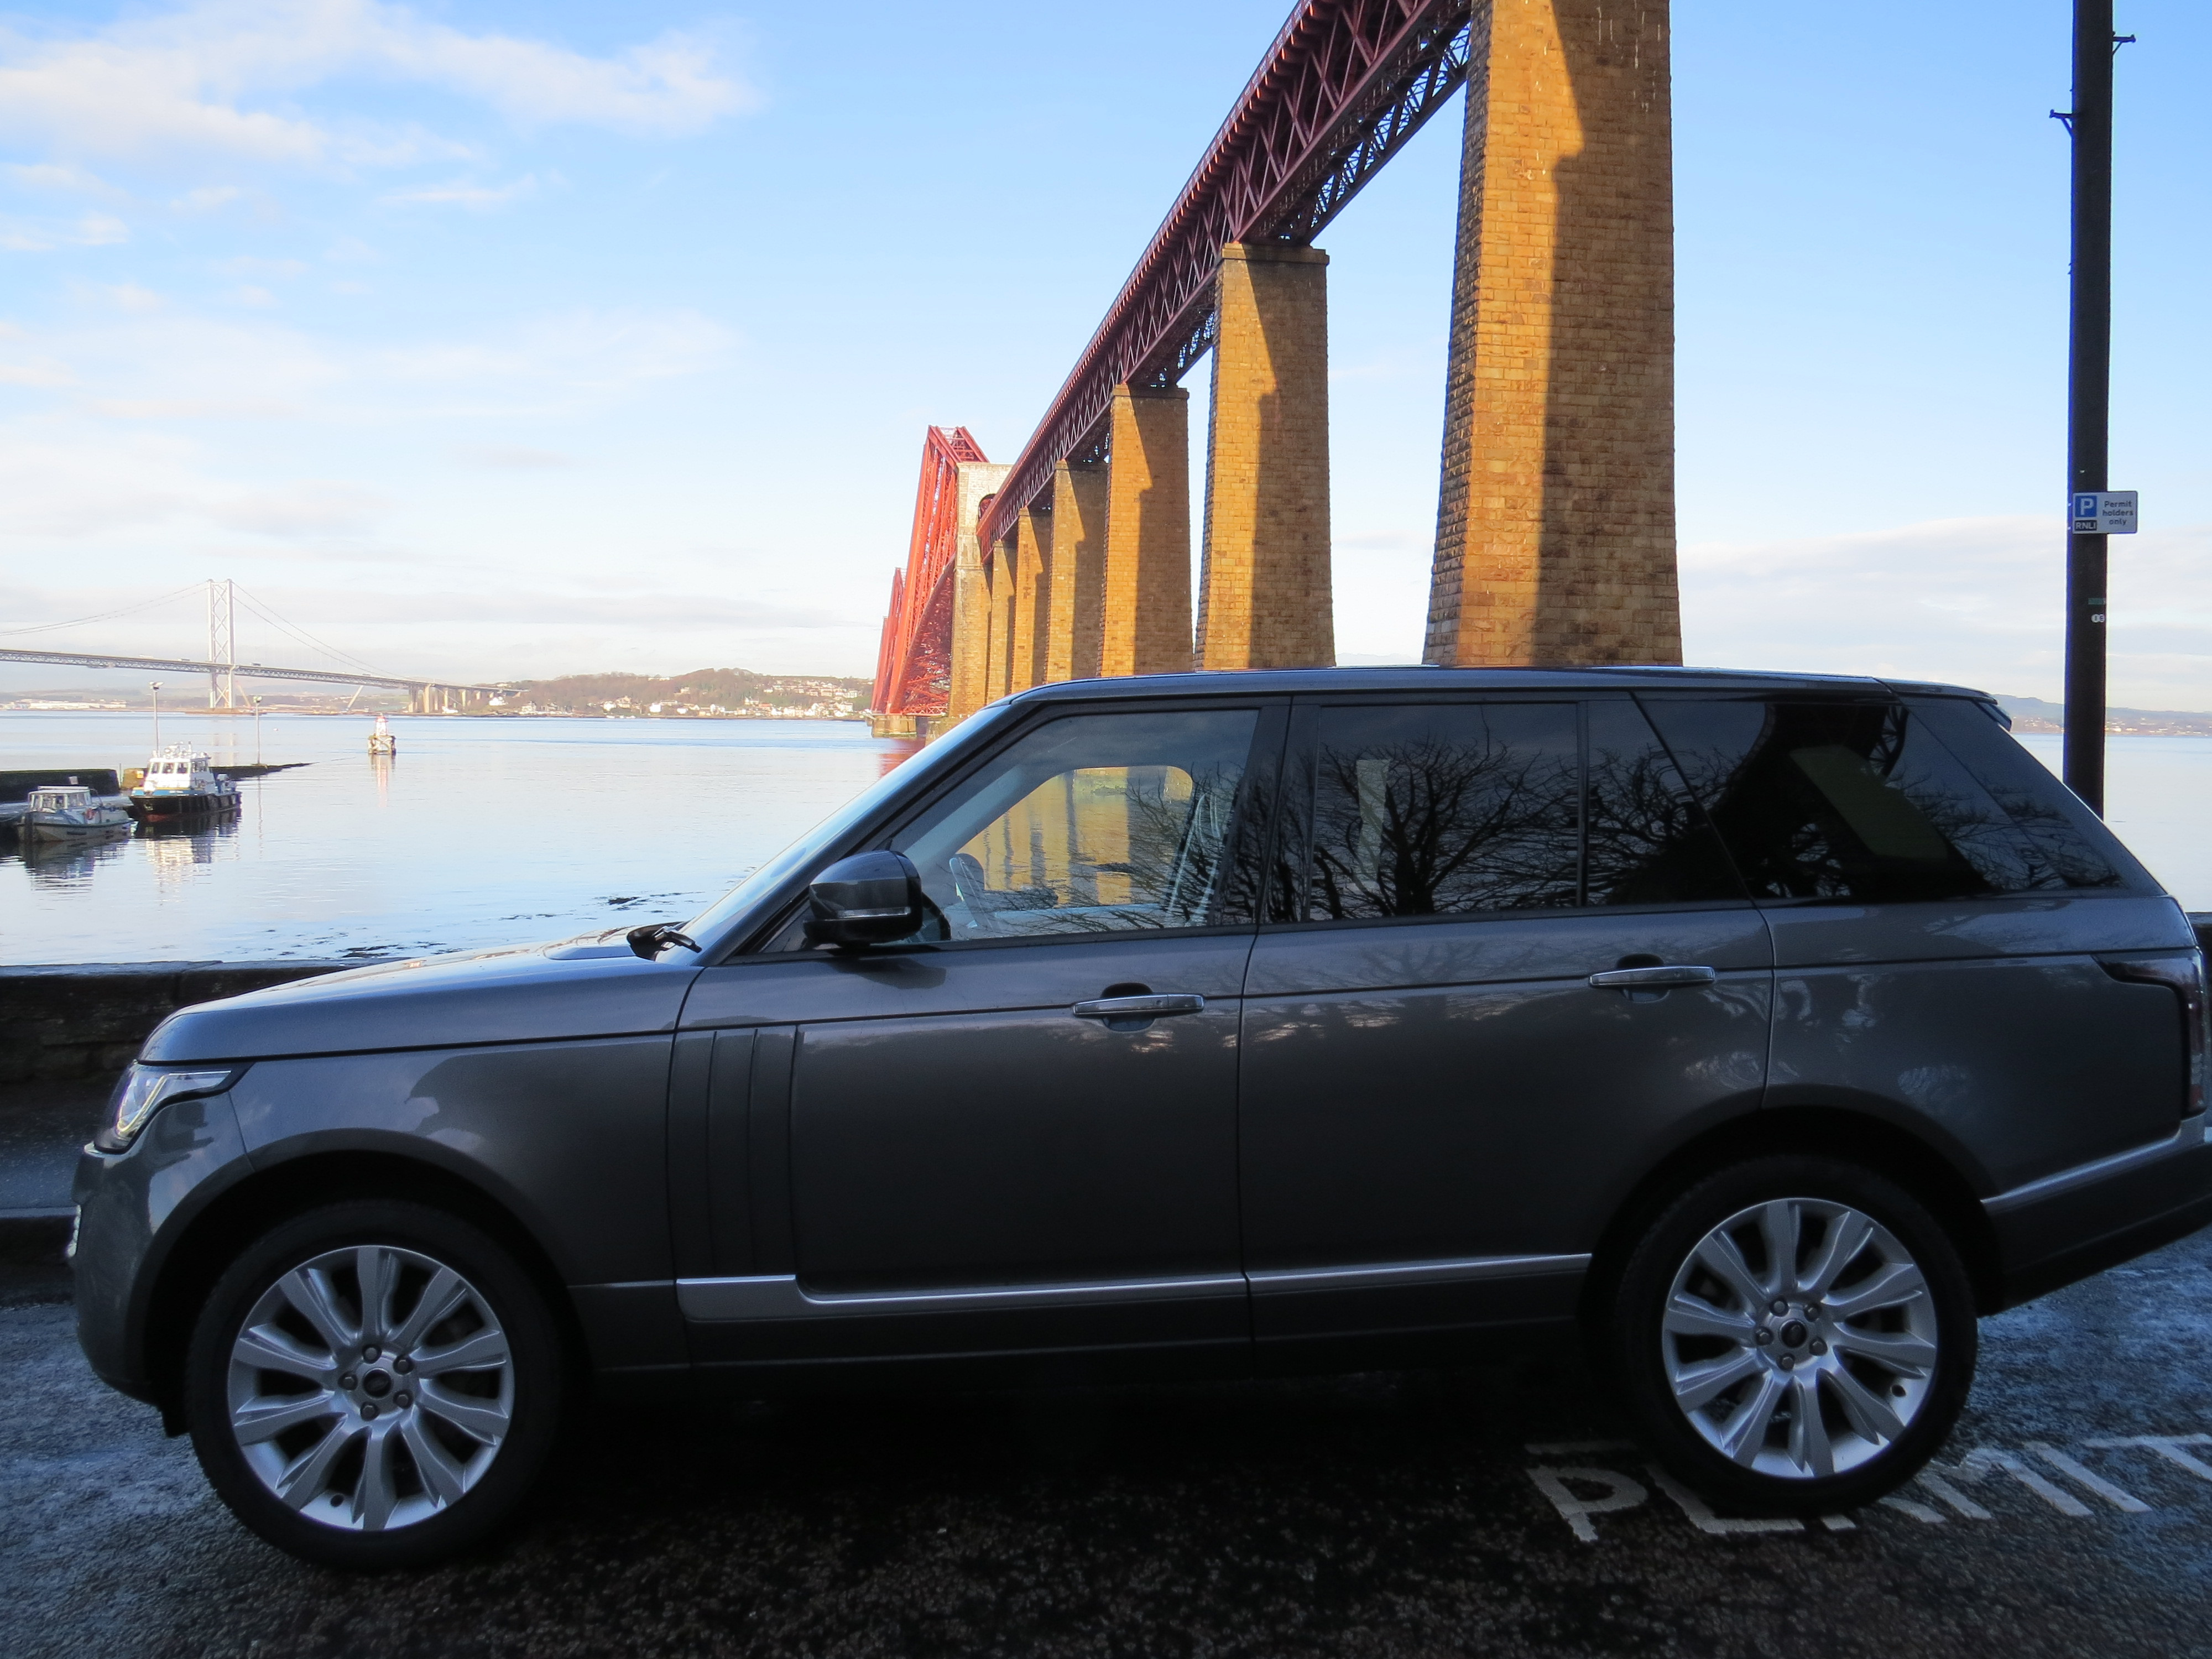 Range Rover Private Tours of Scotland - Forth Bridges